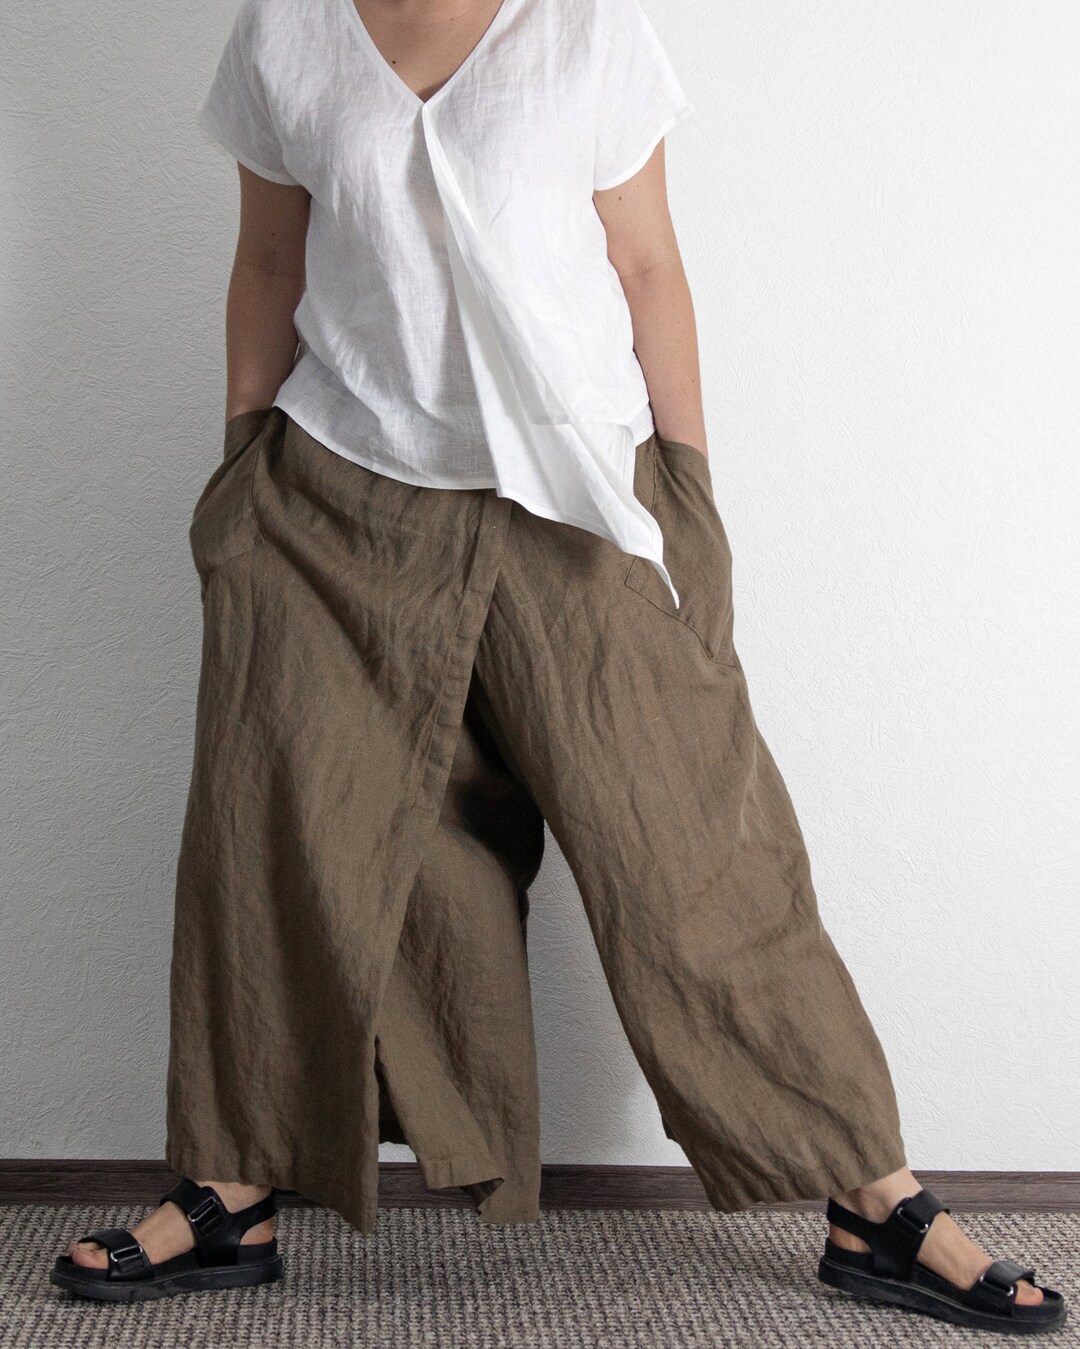 Linen Wrap Pants Skirt-pants With an Elastic Band - Etsy